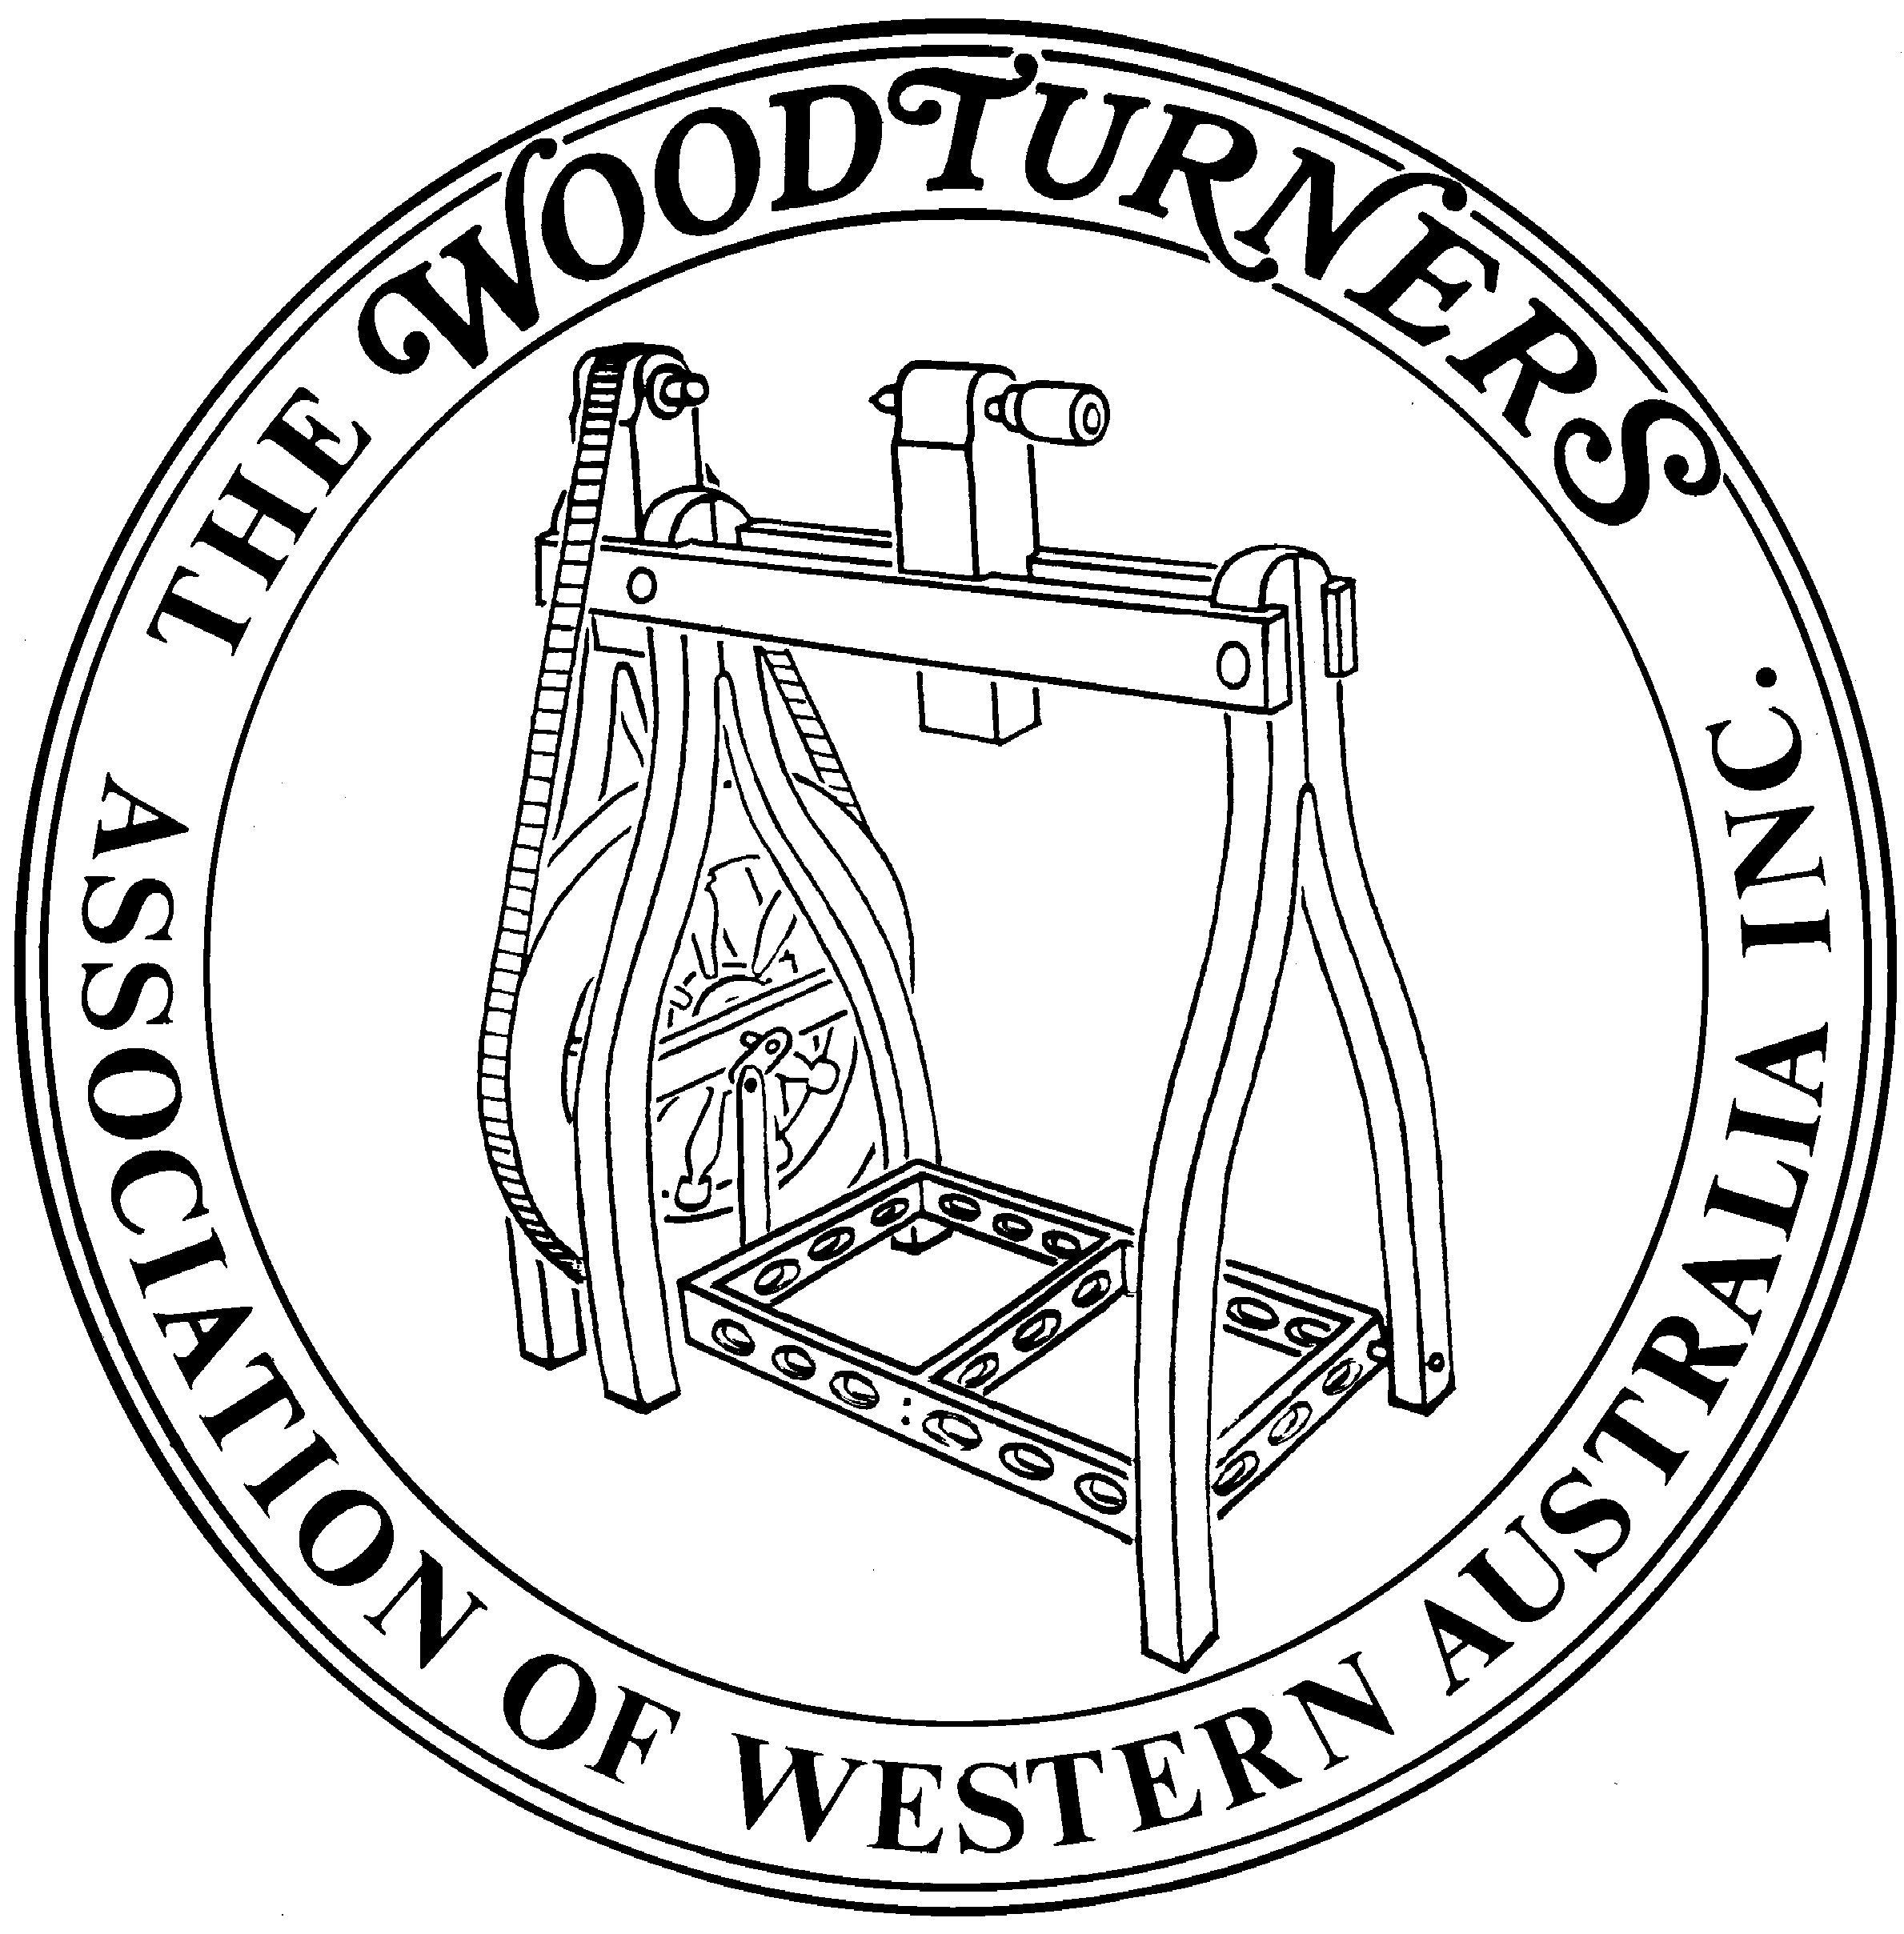 Woodturners Association of Western Australia